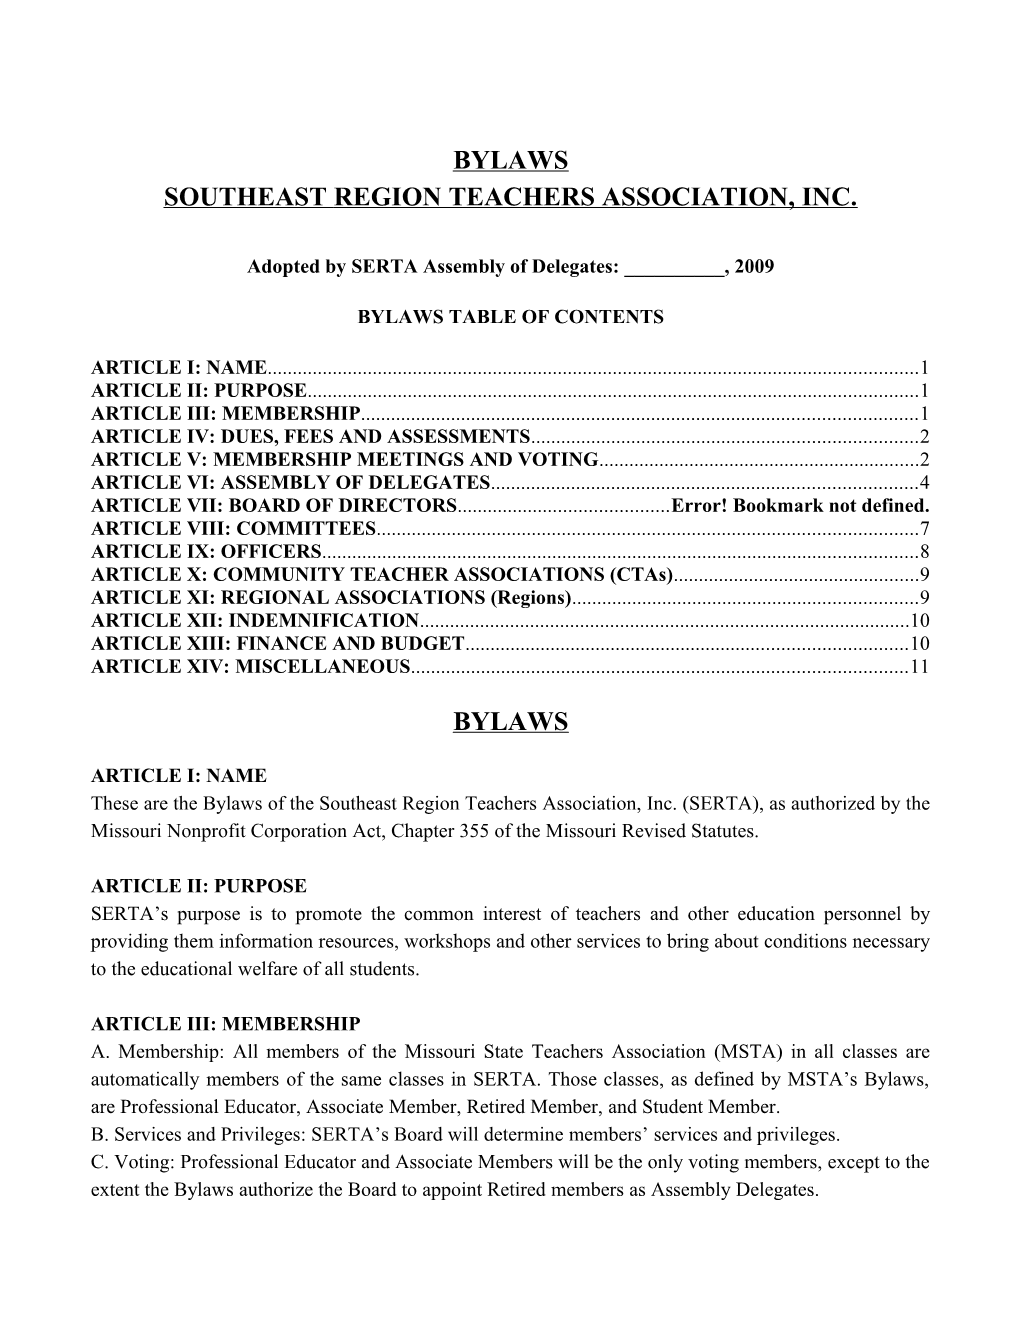 Bylaws of Southeast Region Teachers Association, Incpage 1